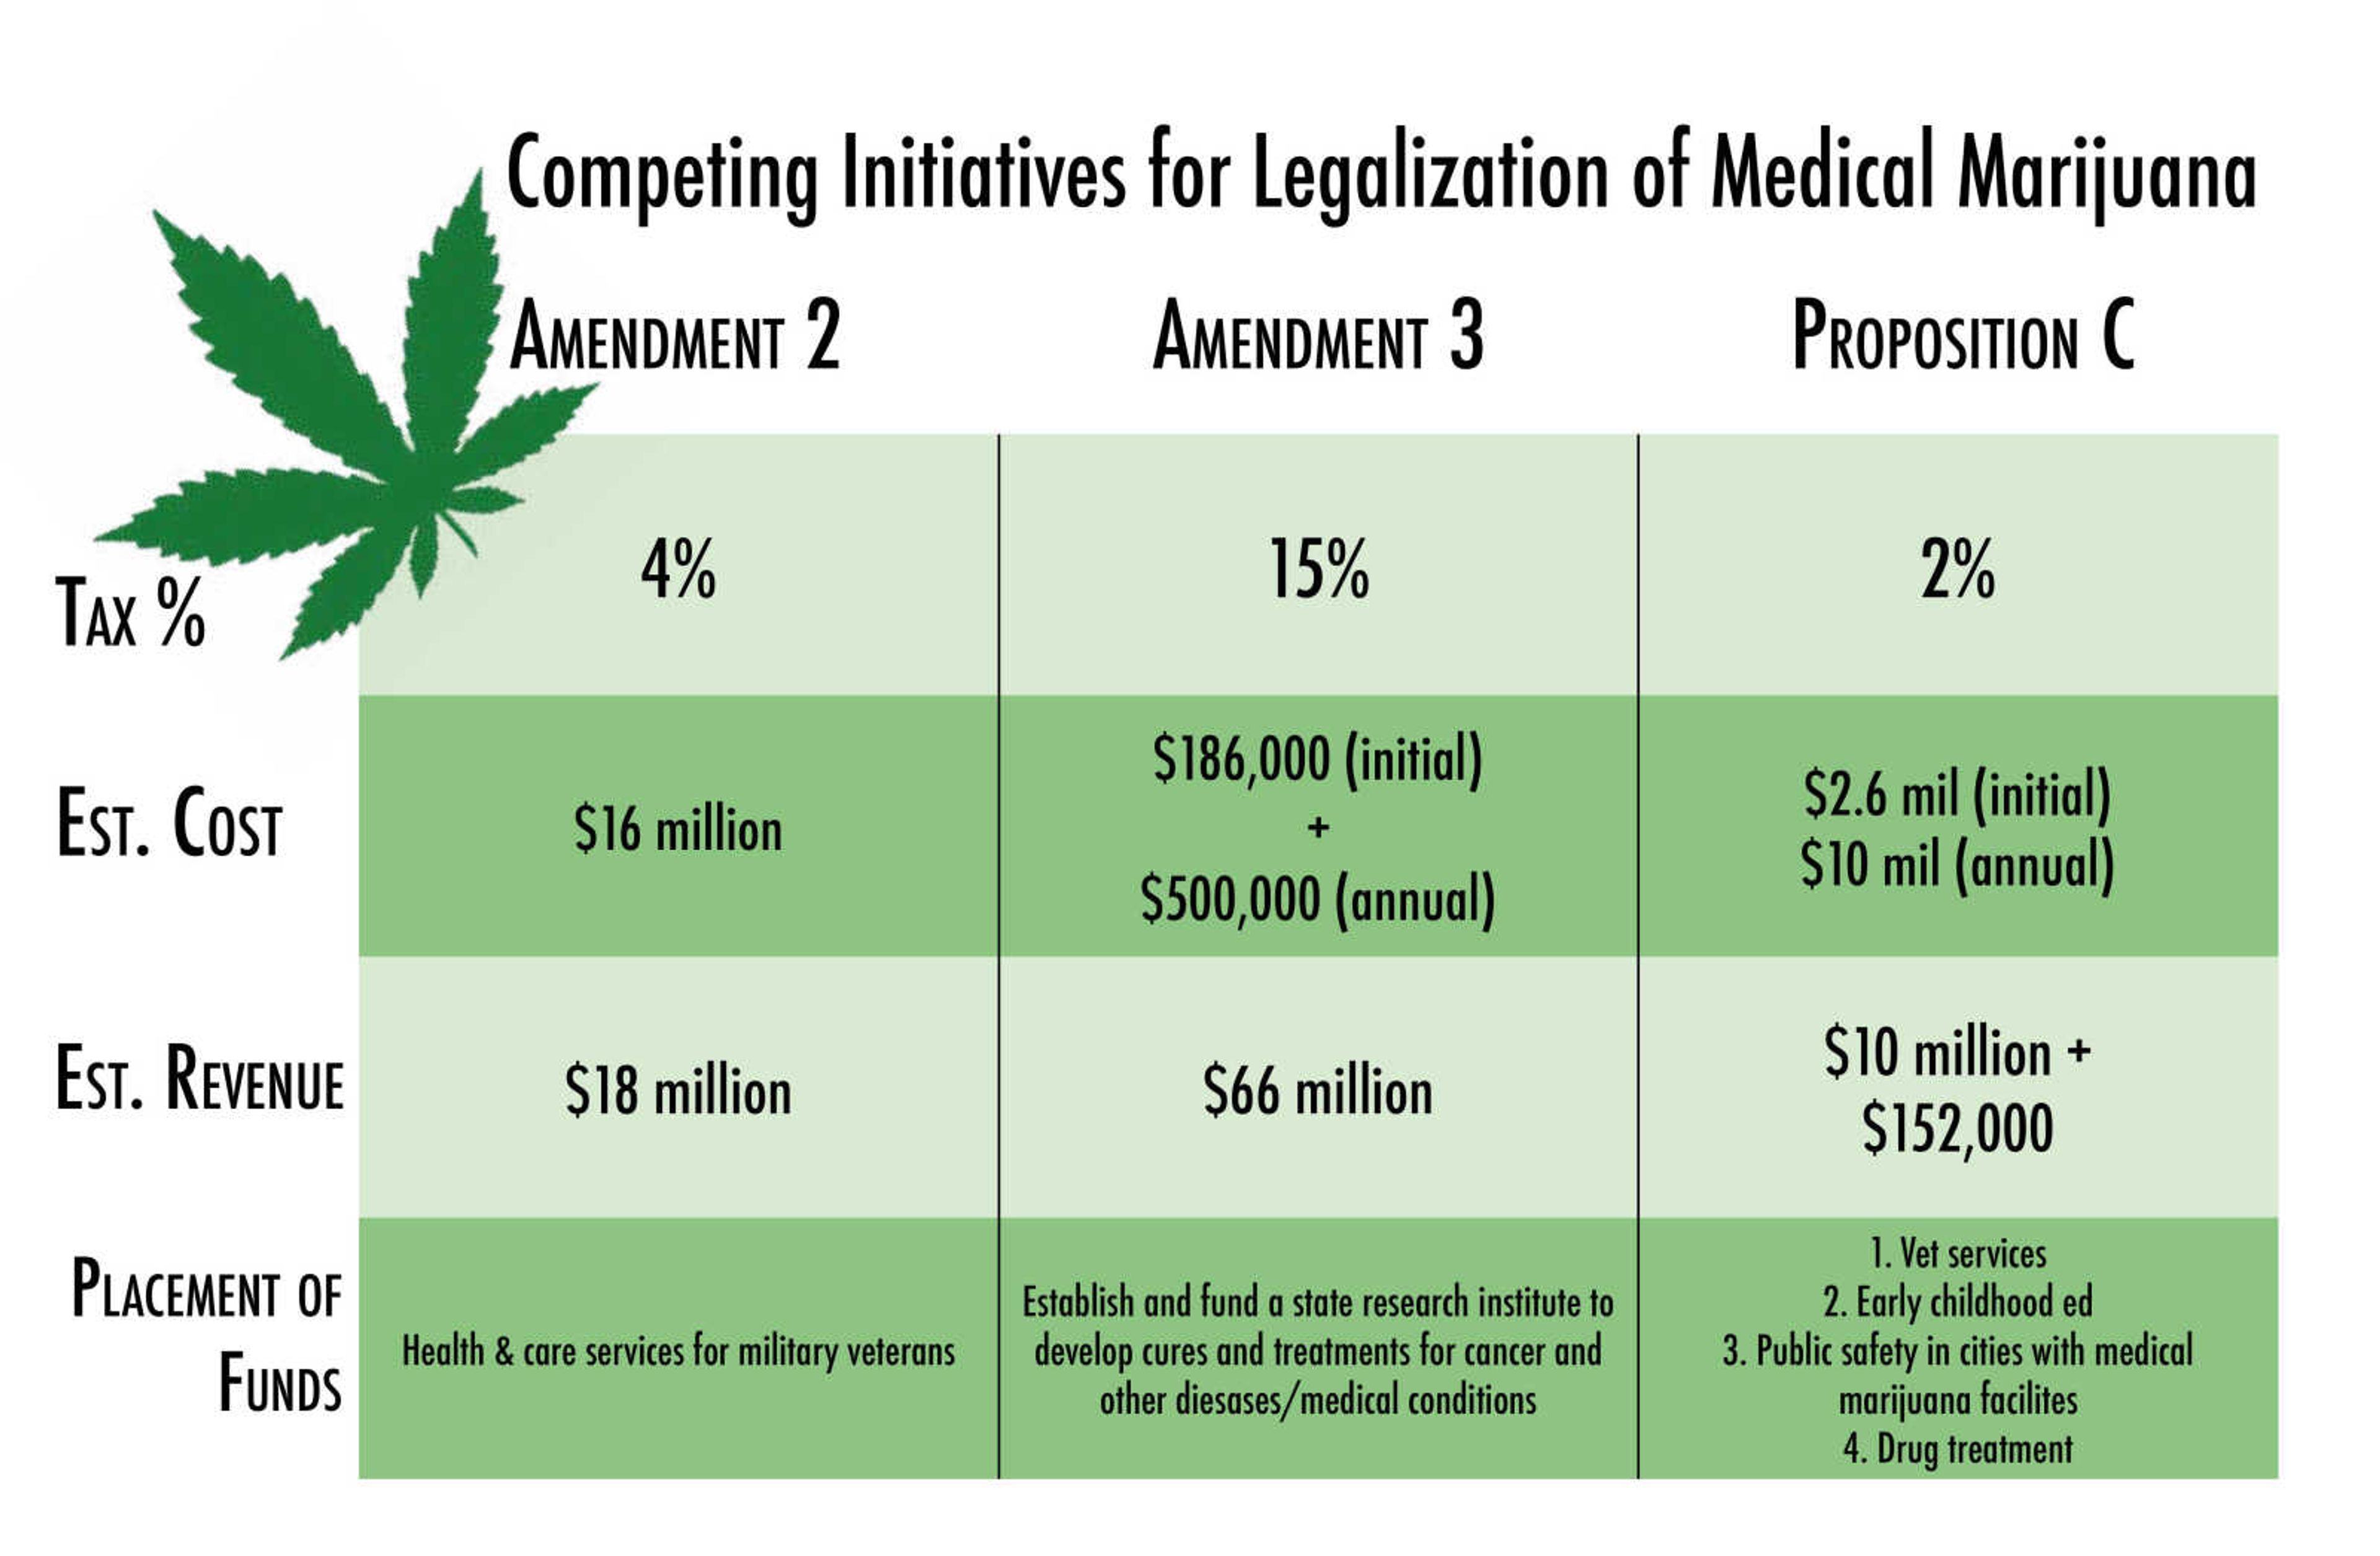 Competing initiatives for legalization of medical marijuana on November ballot